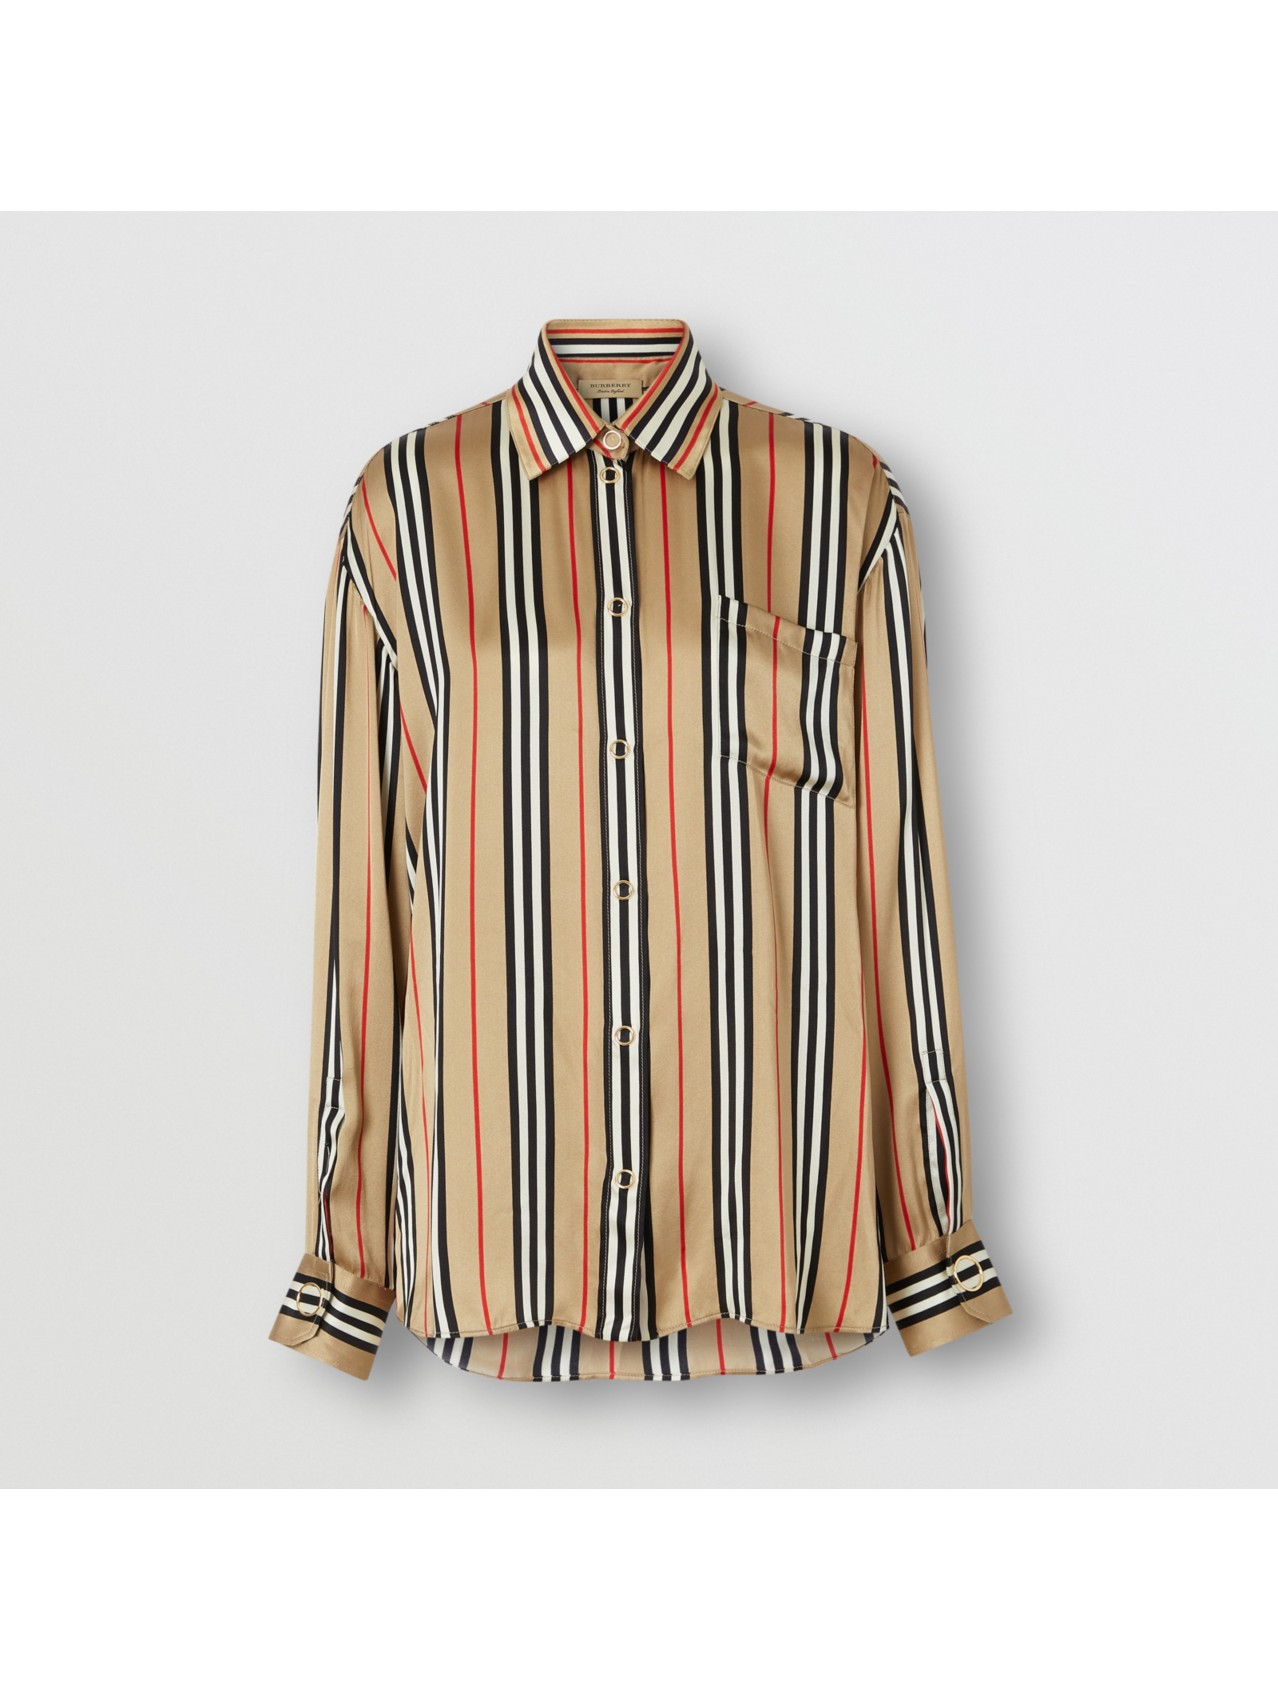 Women’s Shirts & Tops | Silk & Cotton Shirts | Burberry® Official